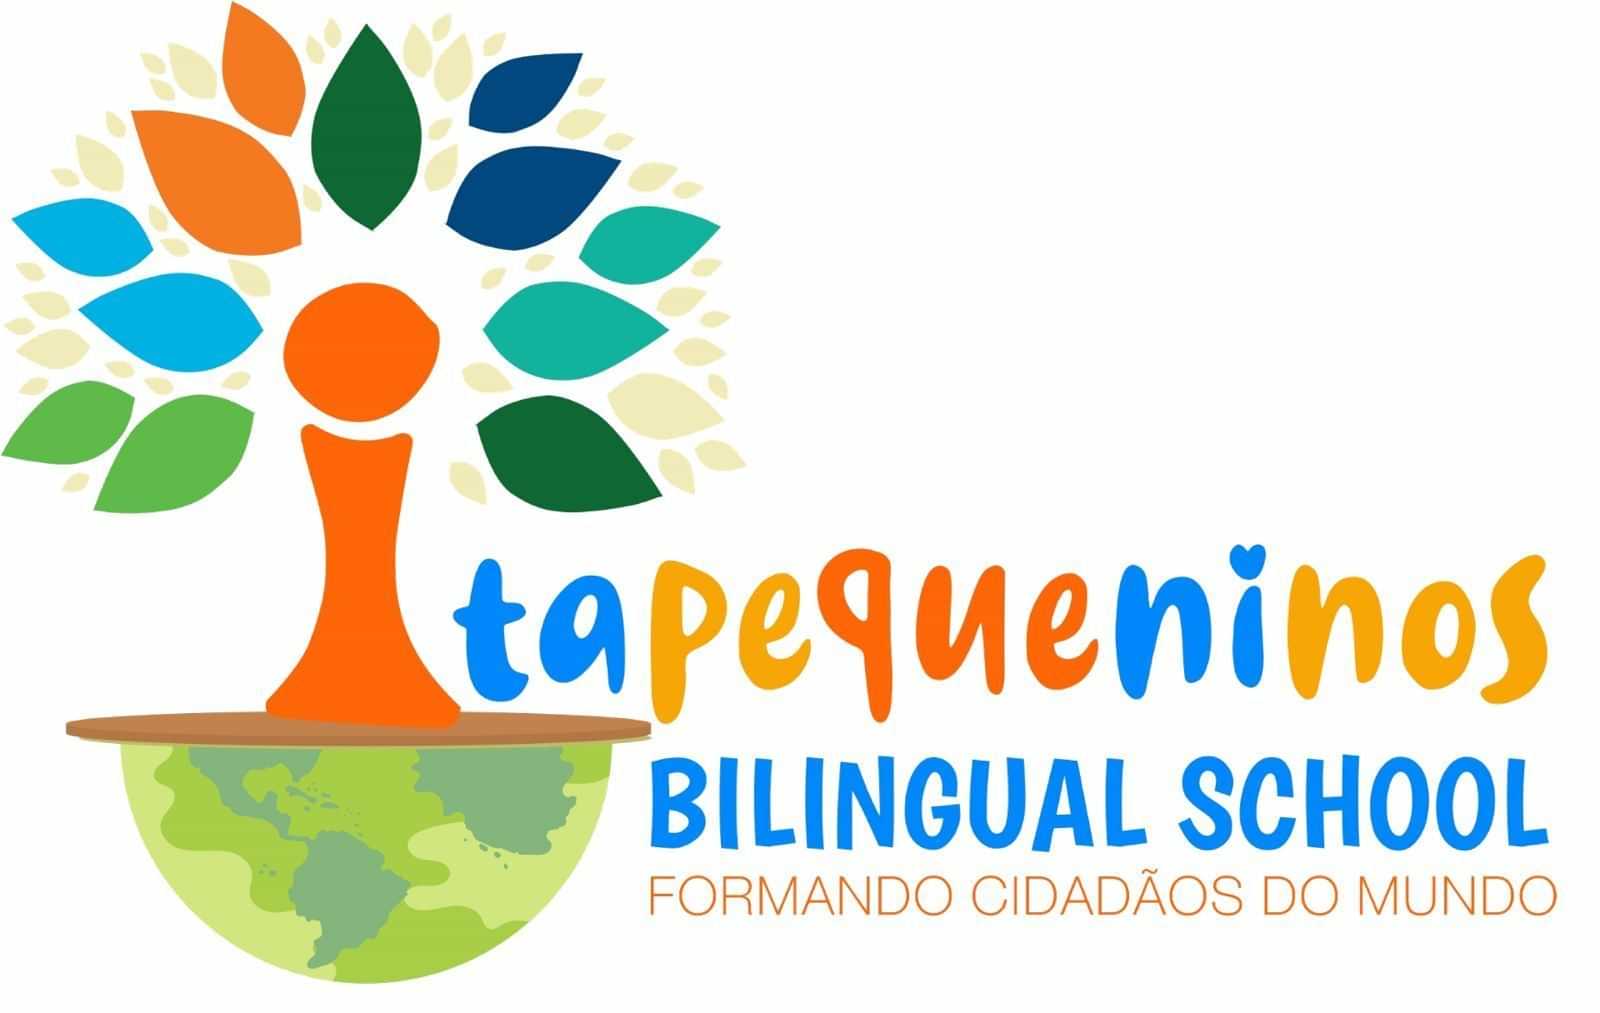  Itapequeninos Centro Educacional – Escola De Programa Bilíngue 